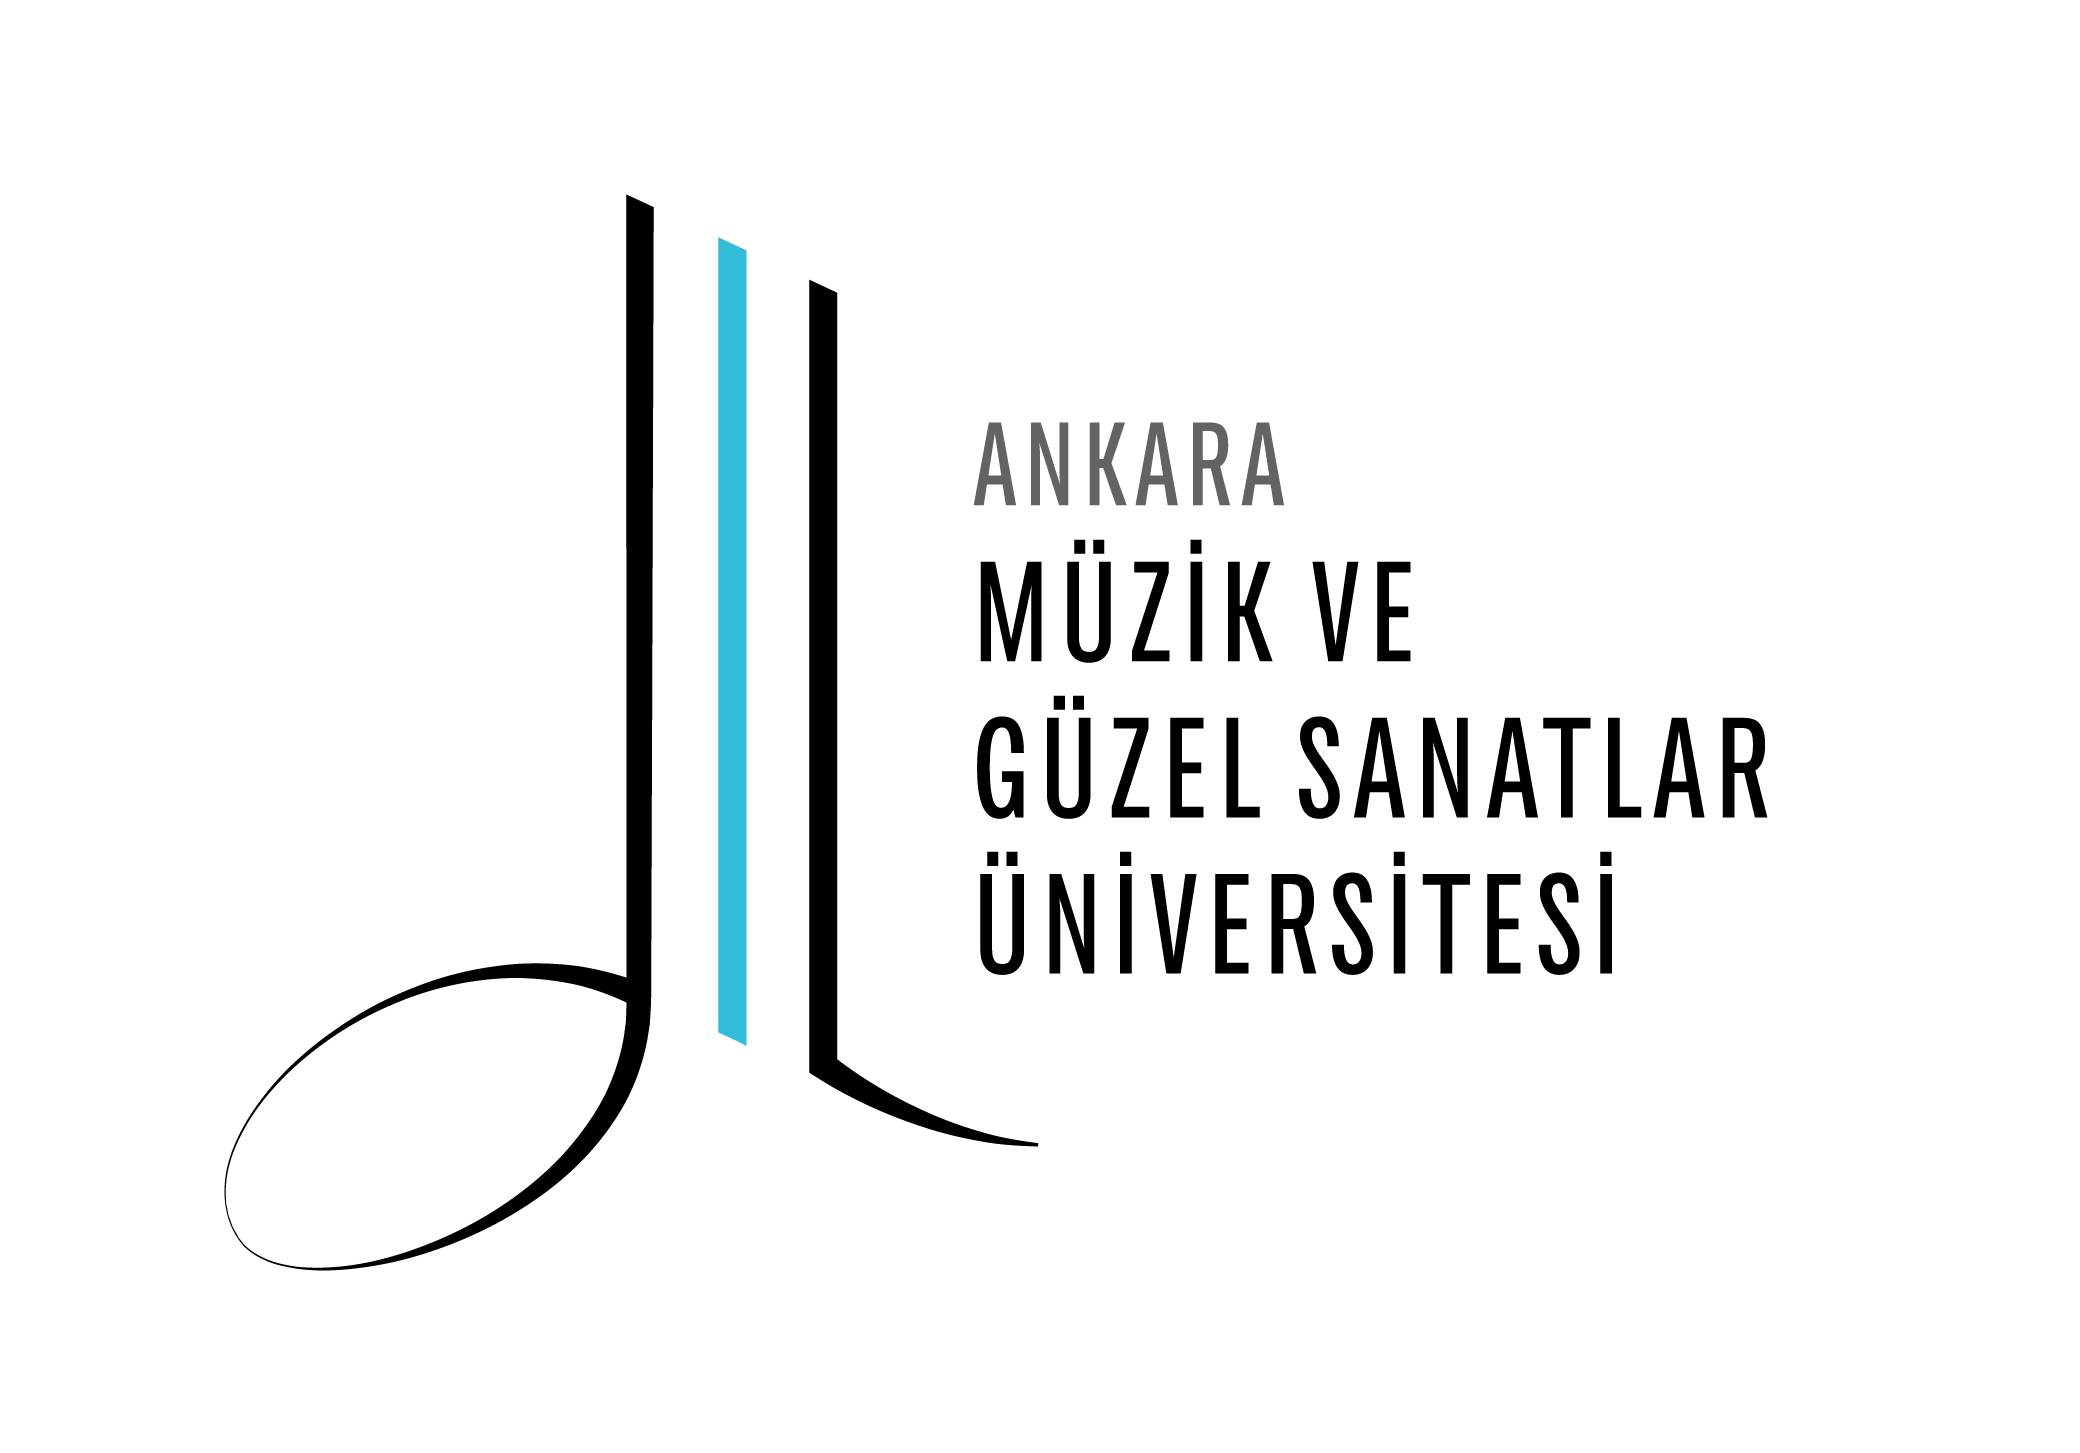 ANKARA MUSIC AND FINE ARTS UNIVERSITY